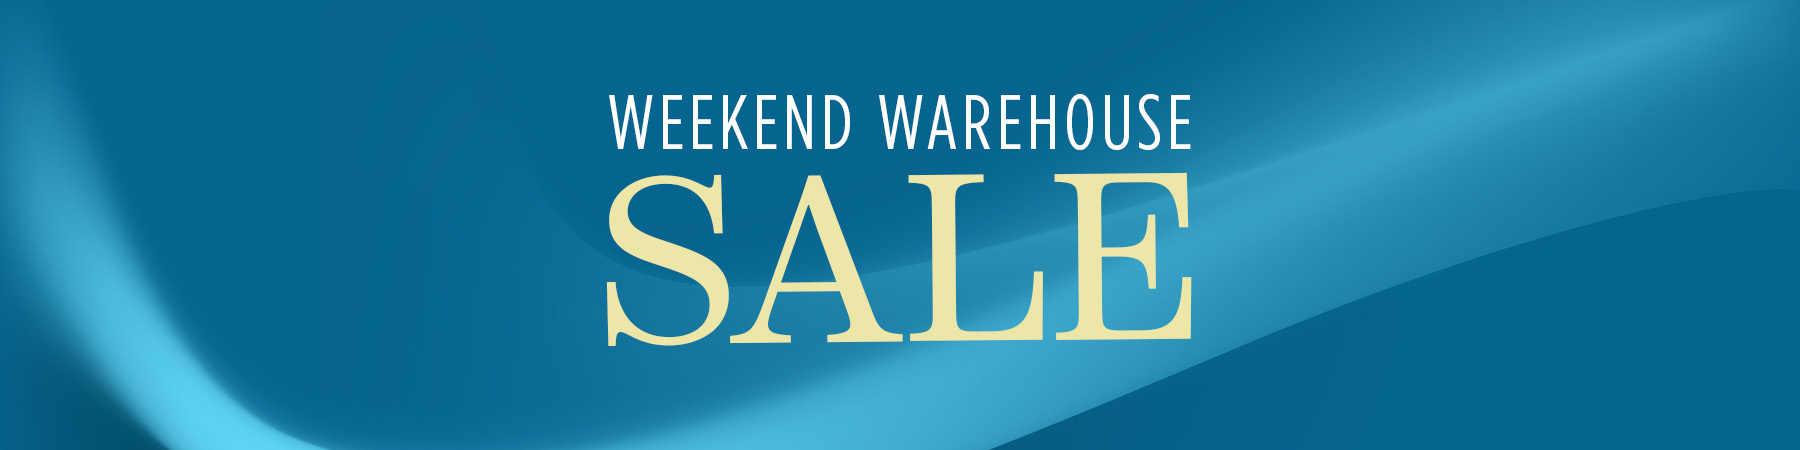 Weekend Warehouse Sale